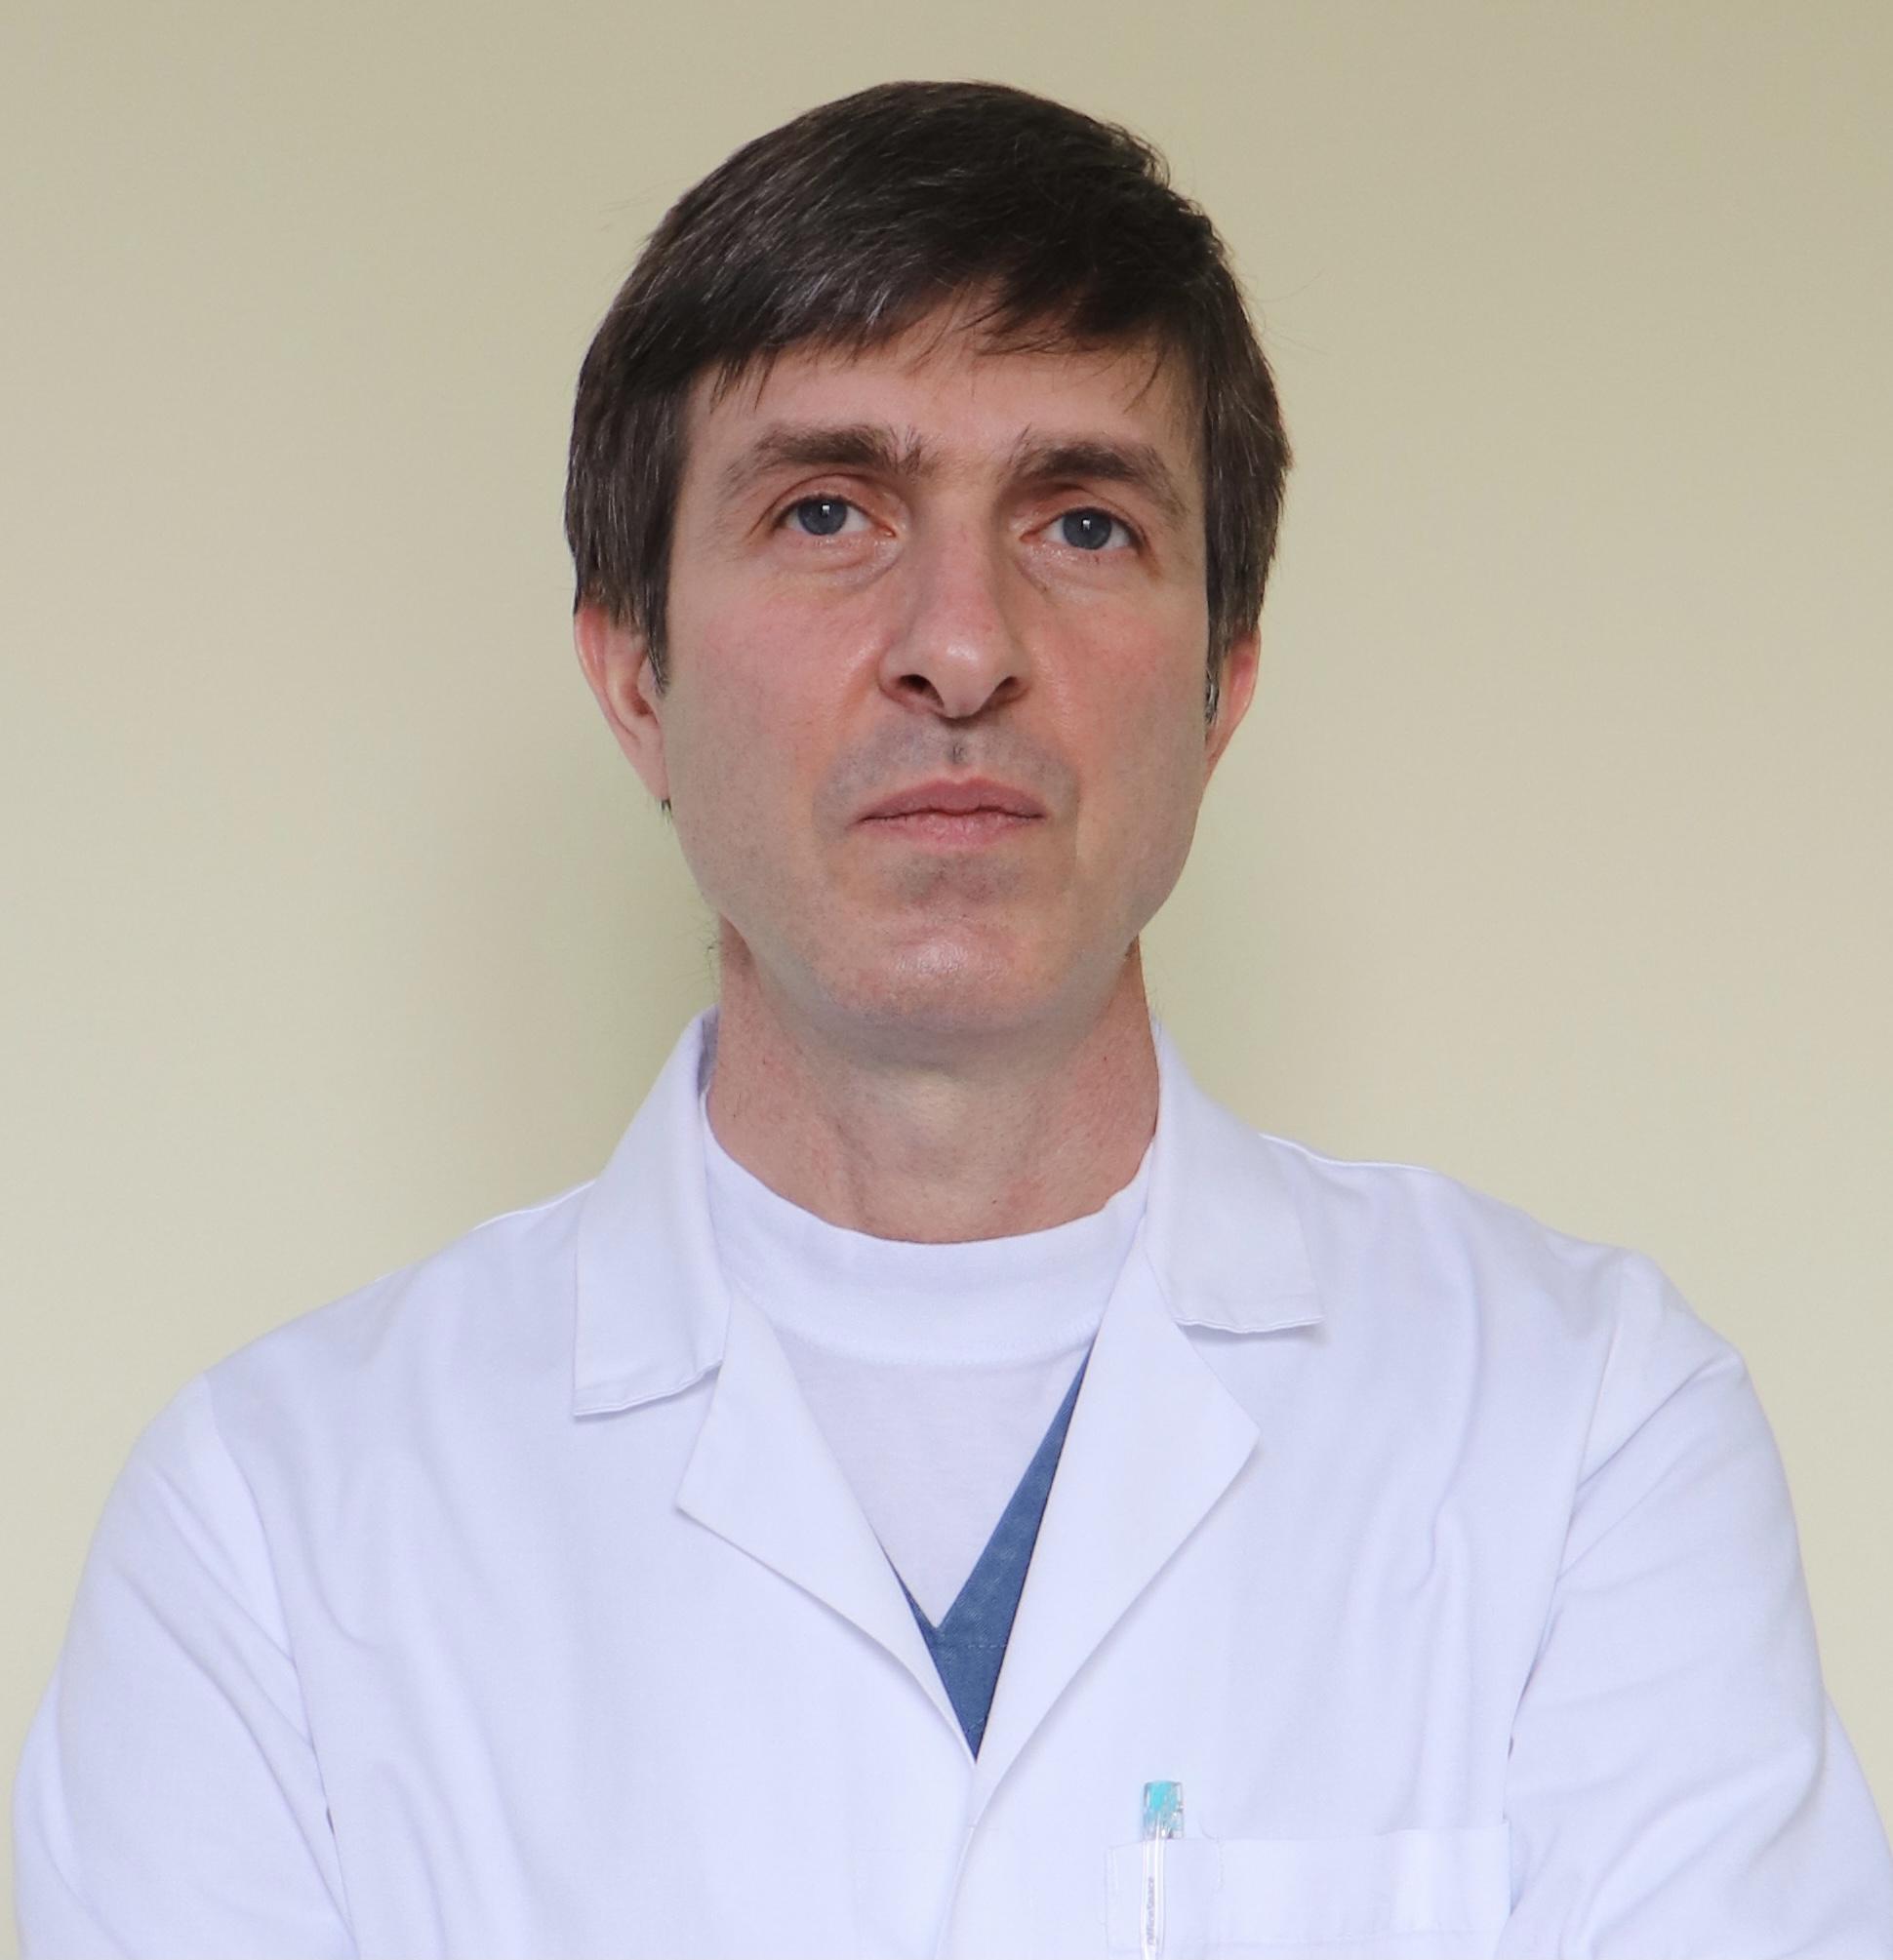 Dr. Andre Amirkhanyan